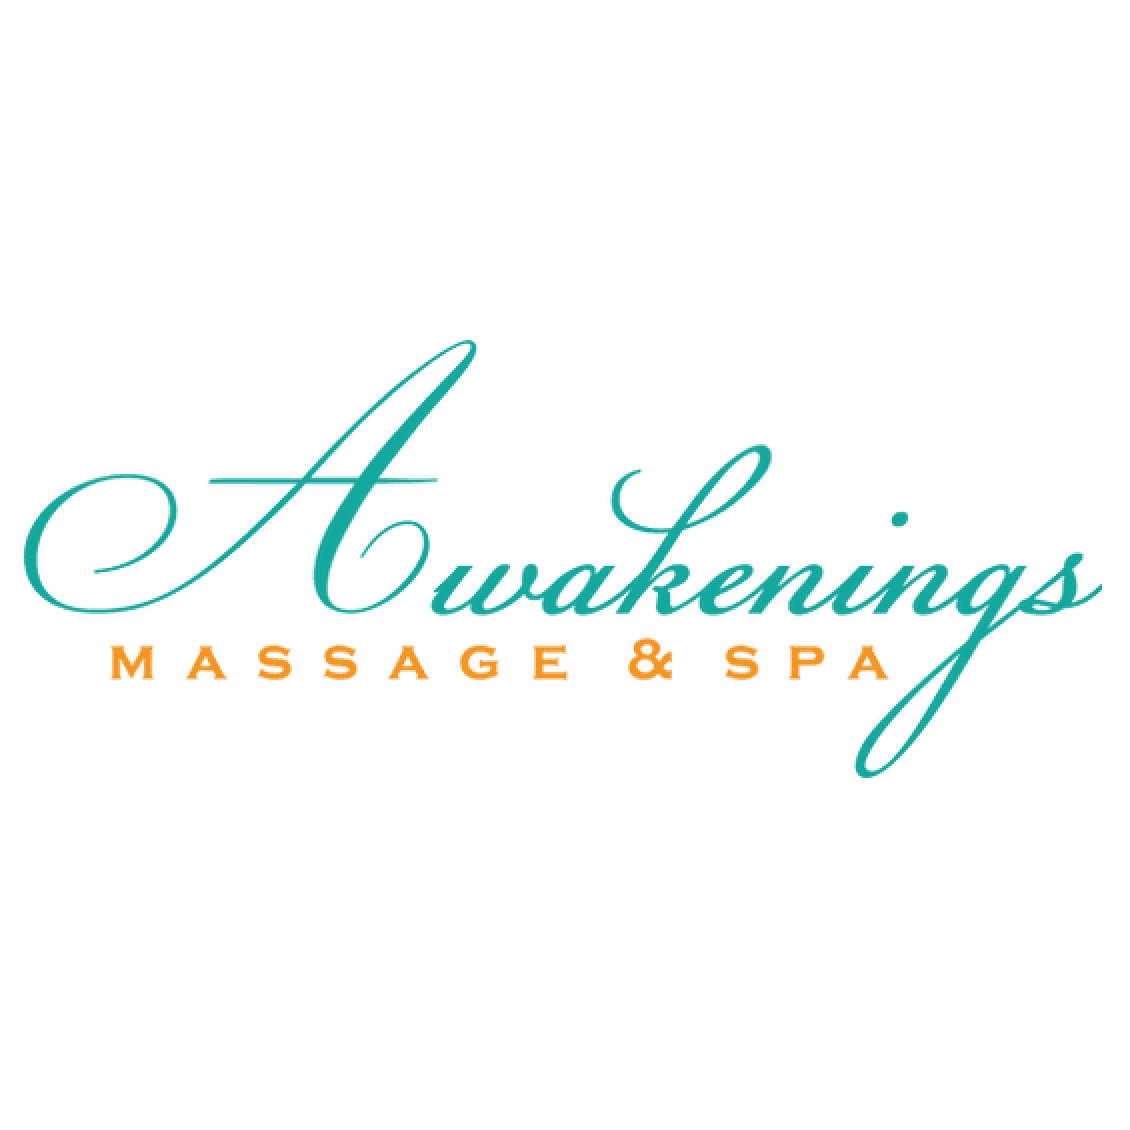 Awakenings Massage and Spa LLC logo